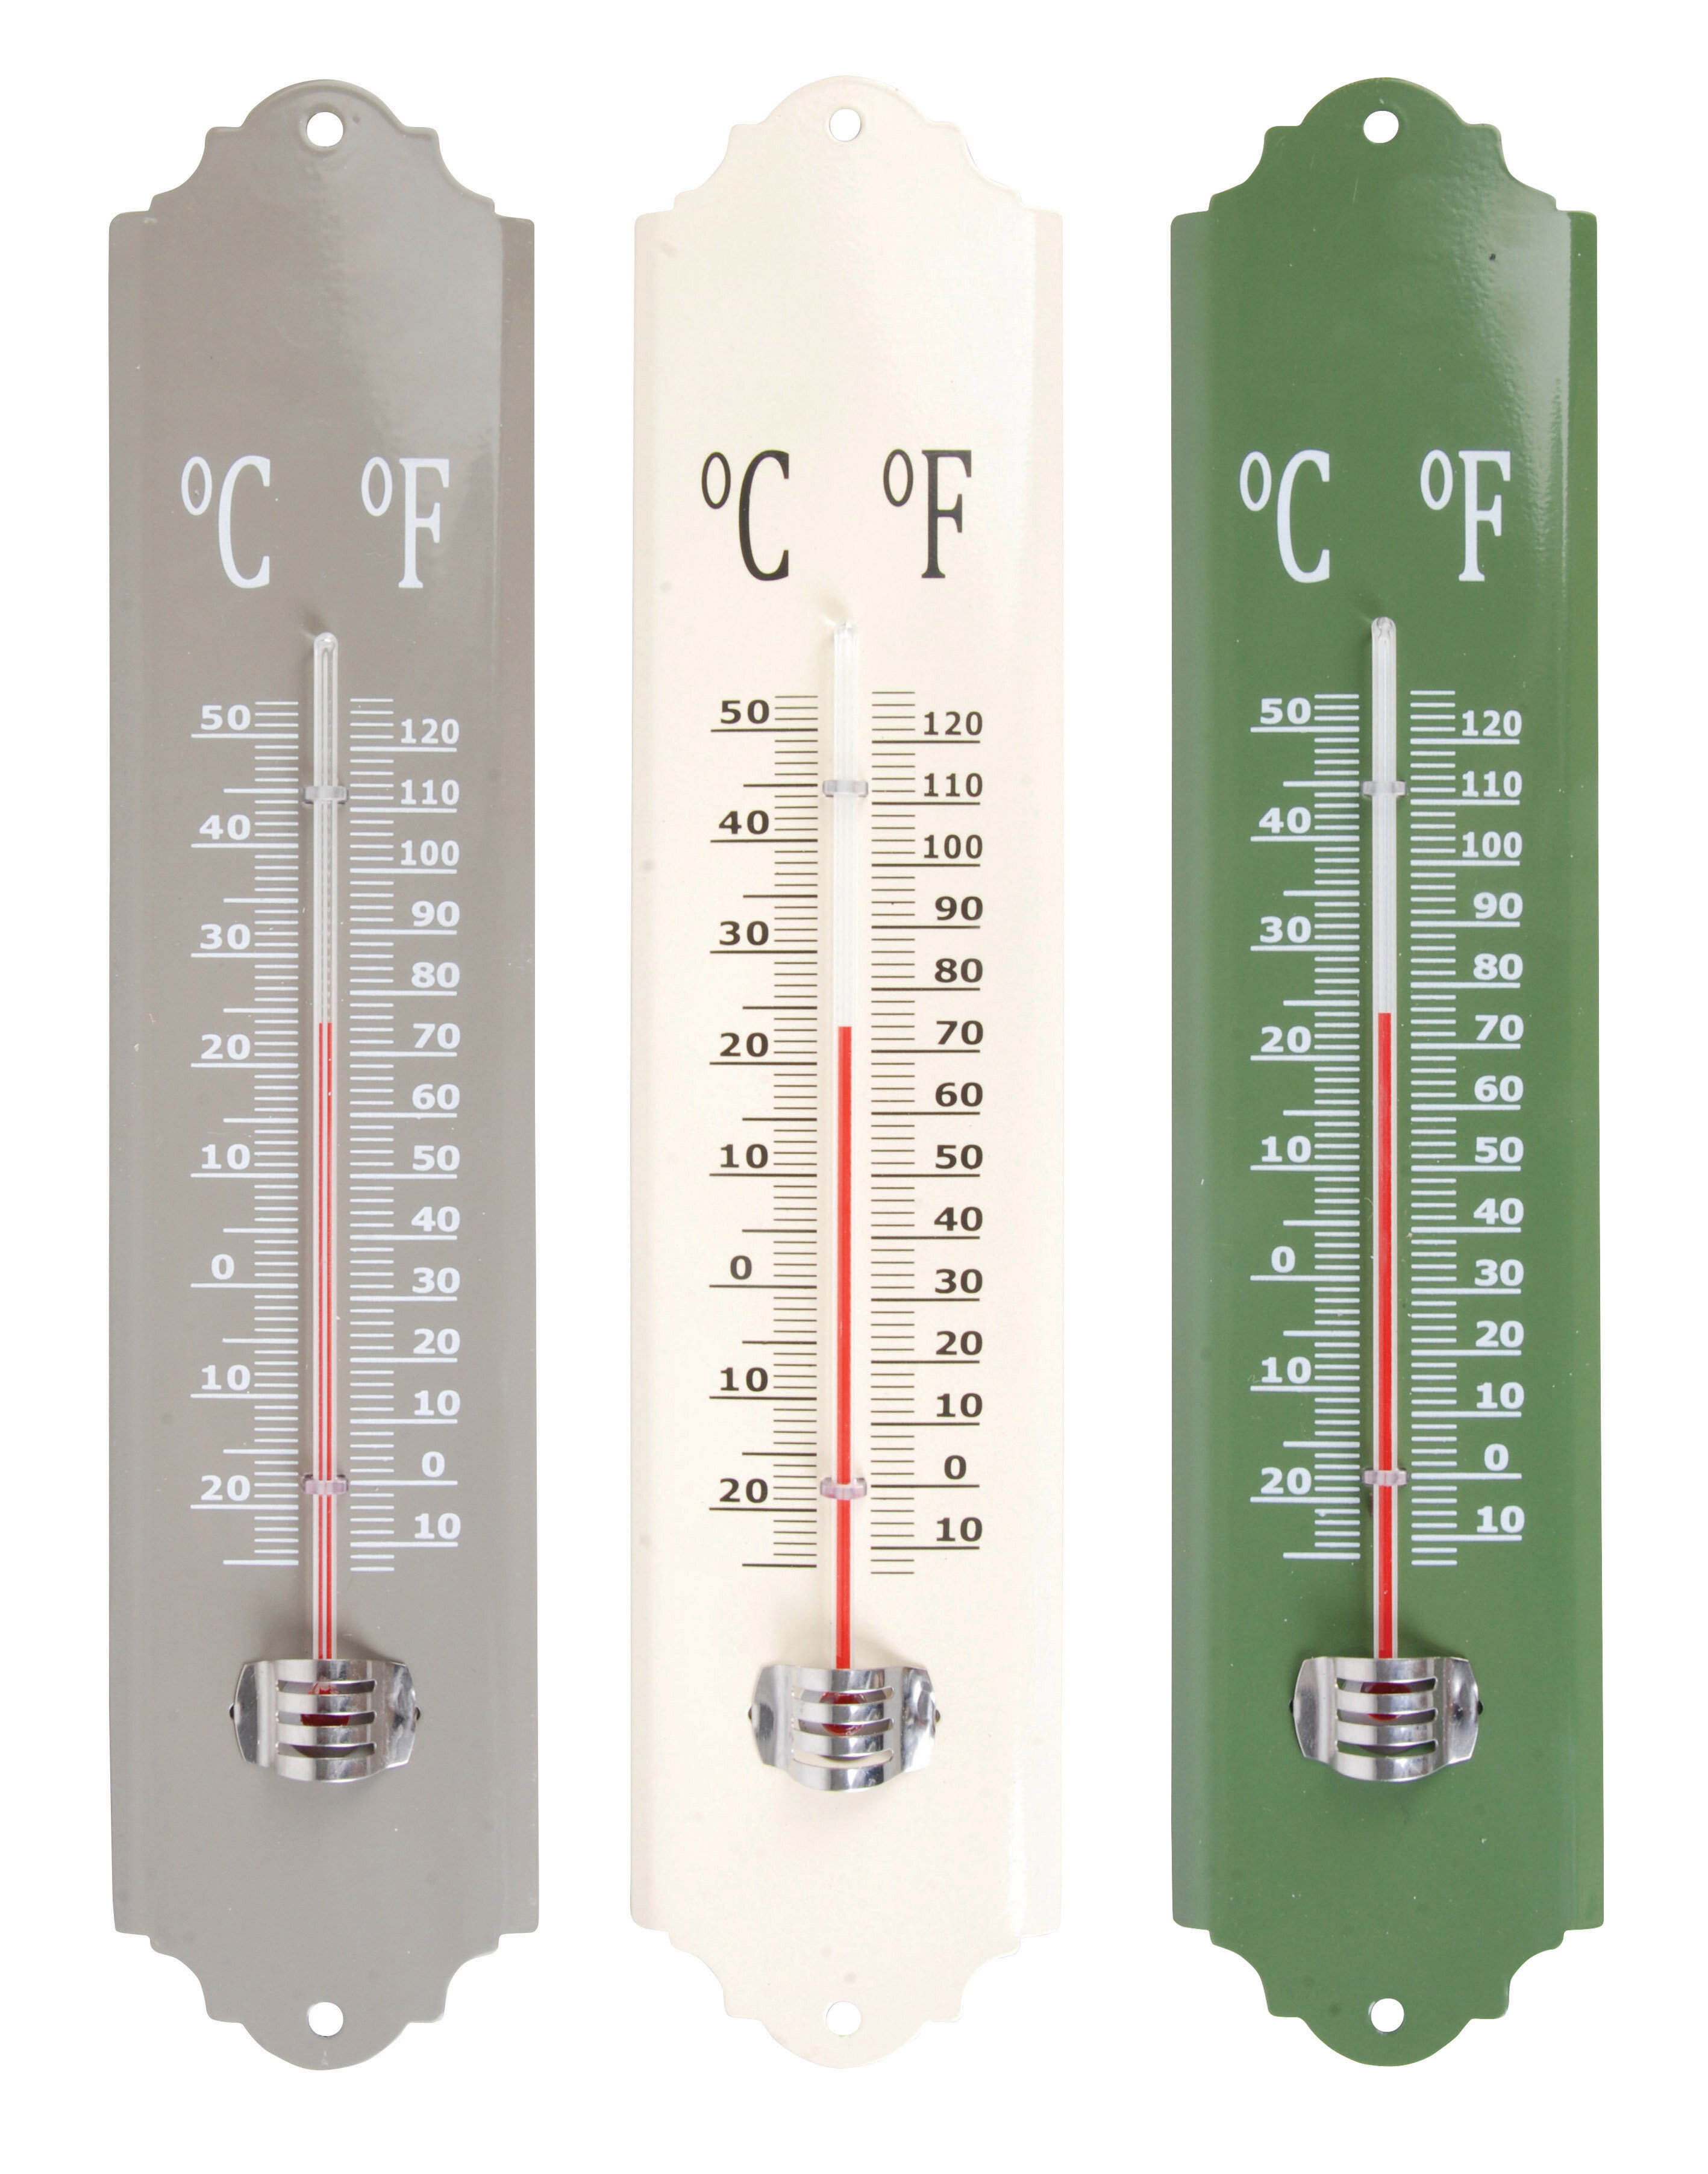 EsschertDesign 11.8'' Outdoor Thermometer & Reviews